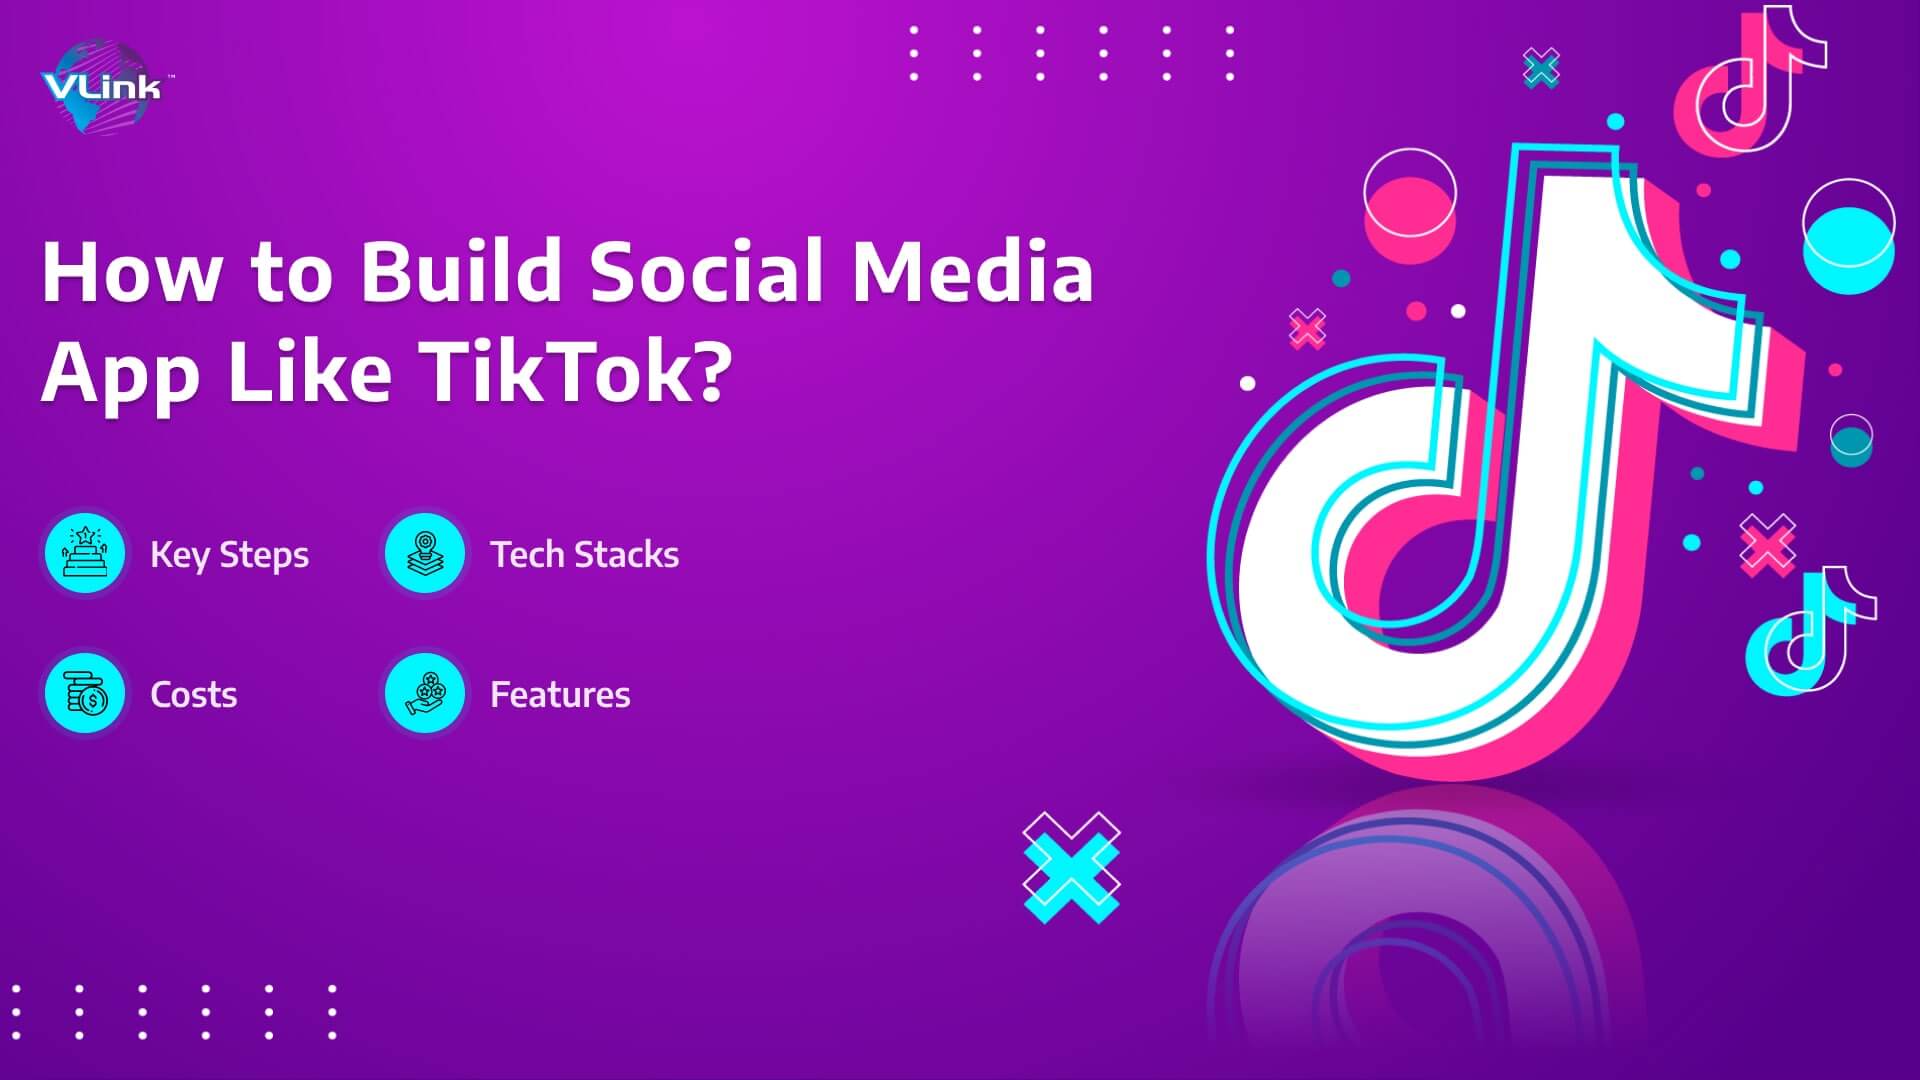 Build Social Media App Like TikTok: Features, Costs | Vlink